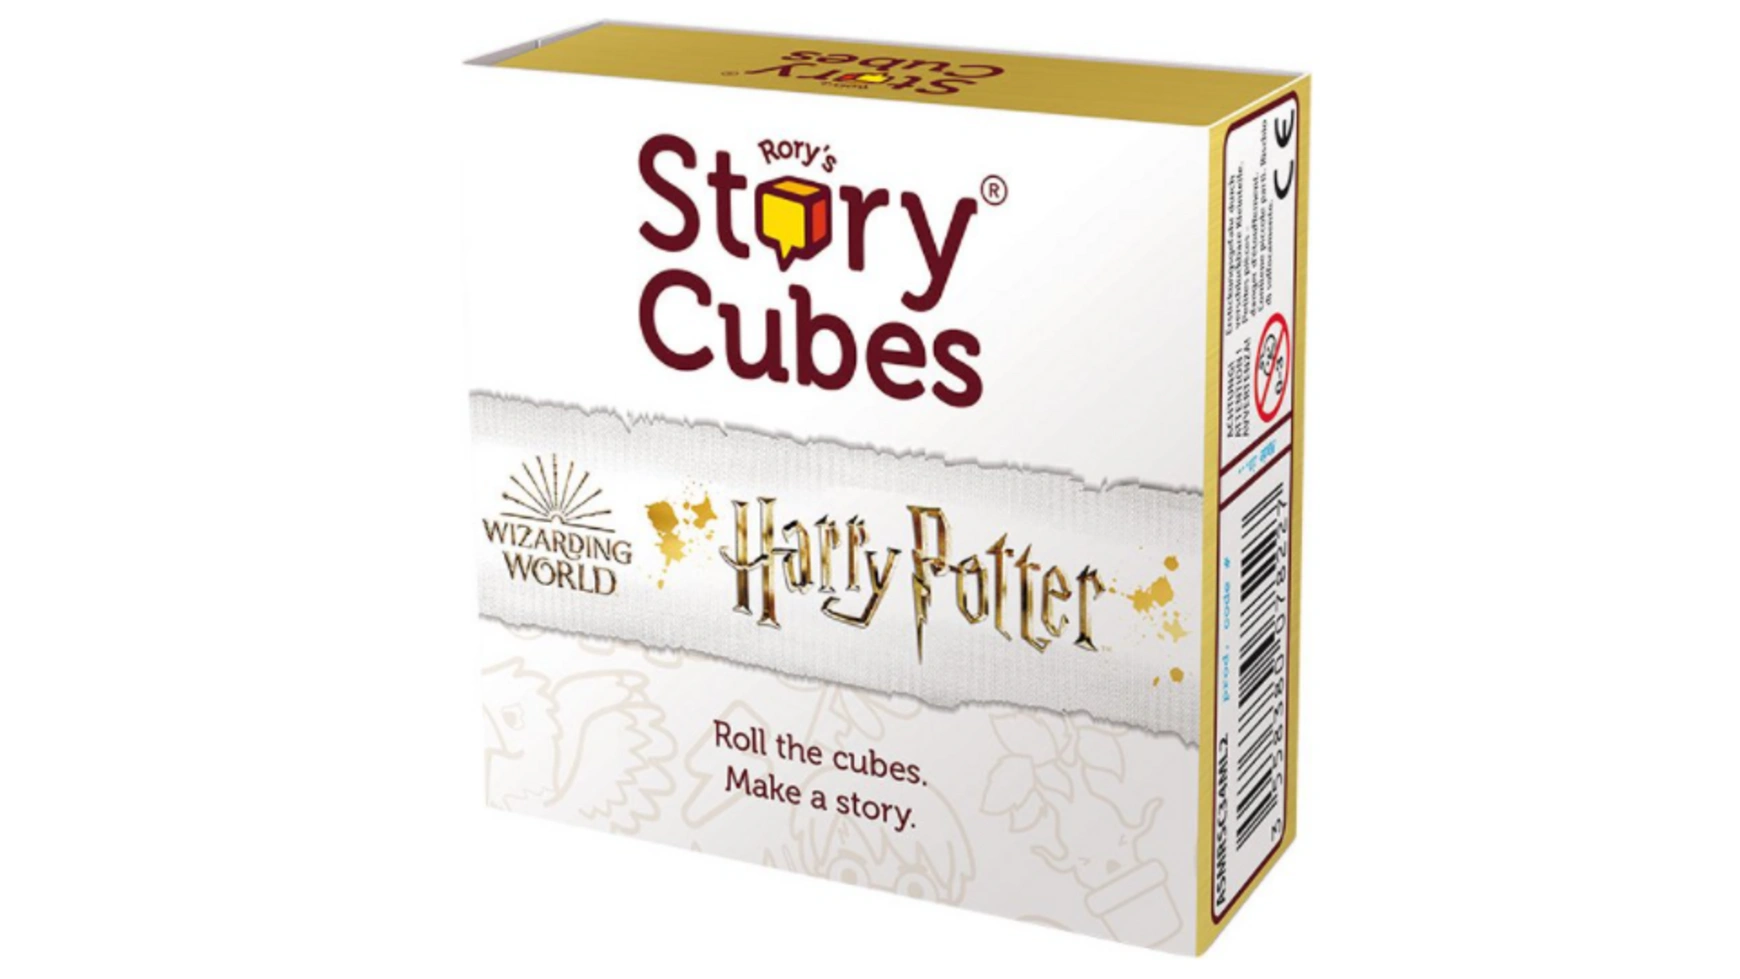 Rorys Story Cubes Кубики историй Рори: Гарри Поттер кубики историй путешествия